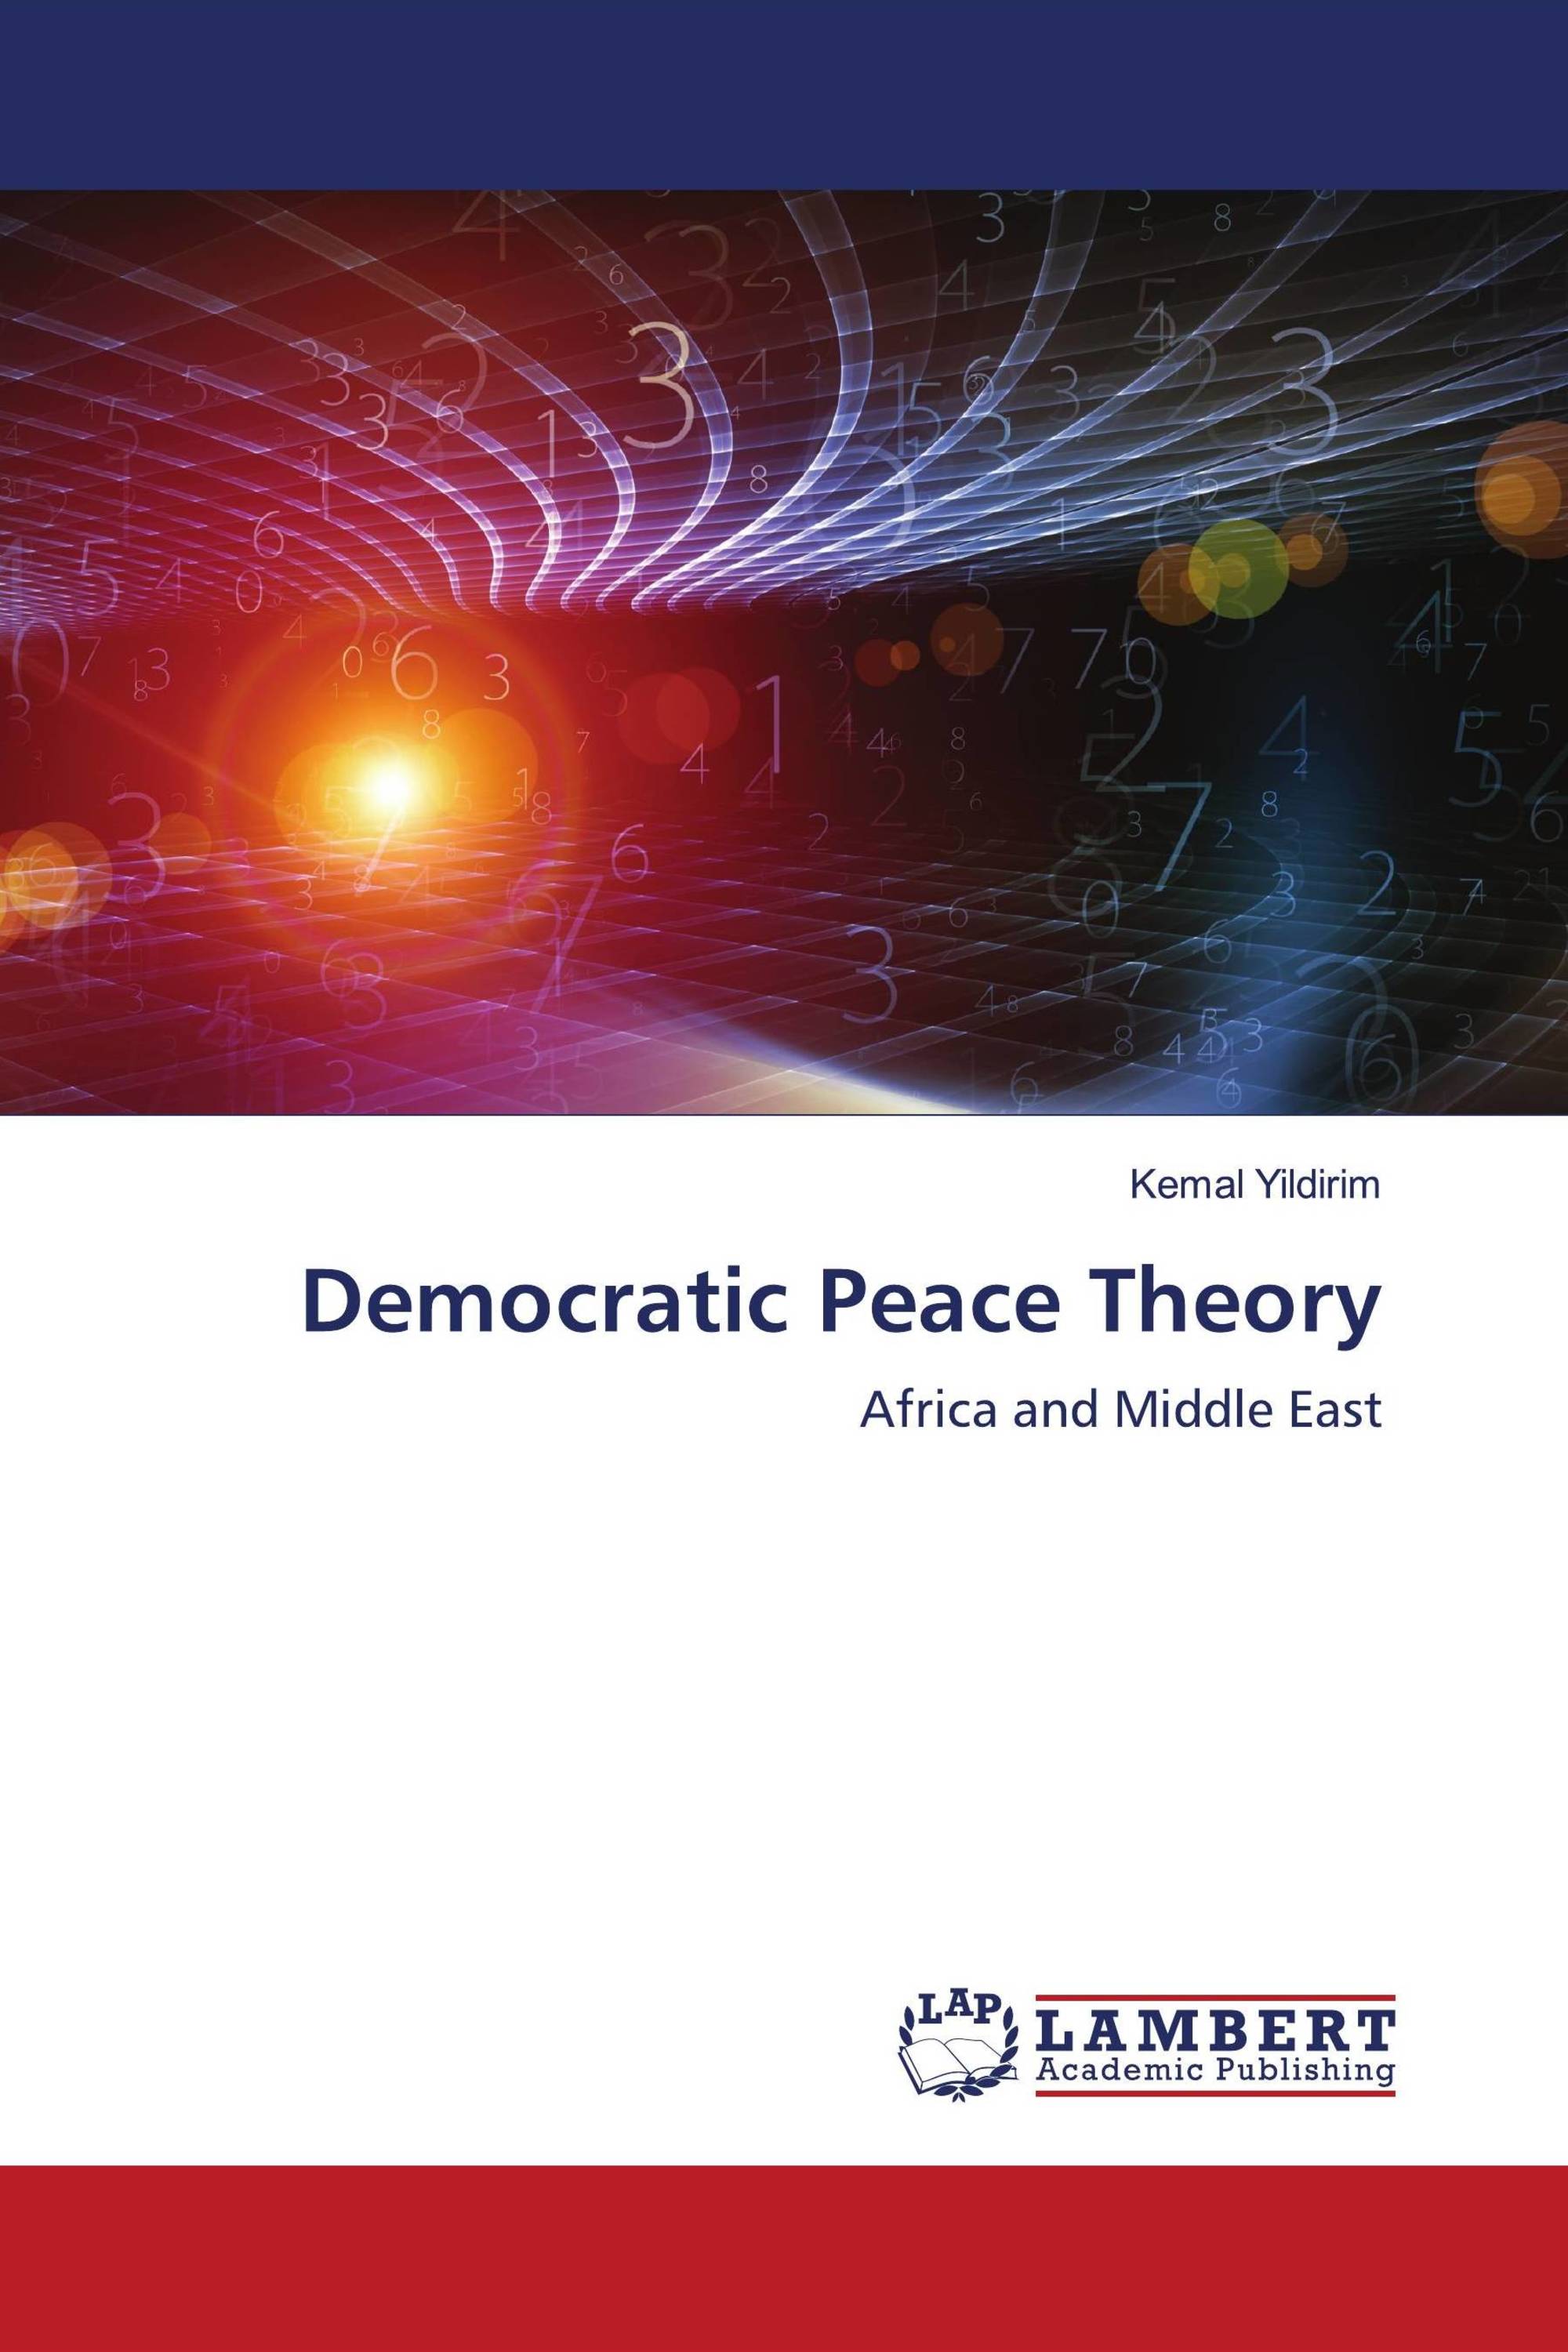 democratic peace theory case study